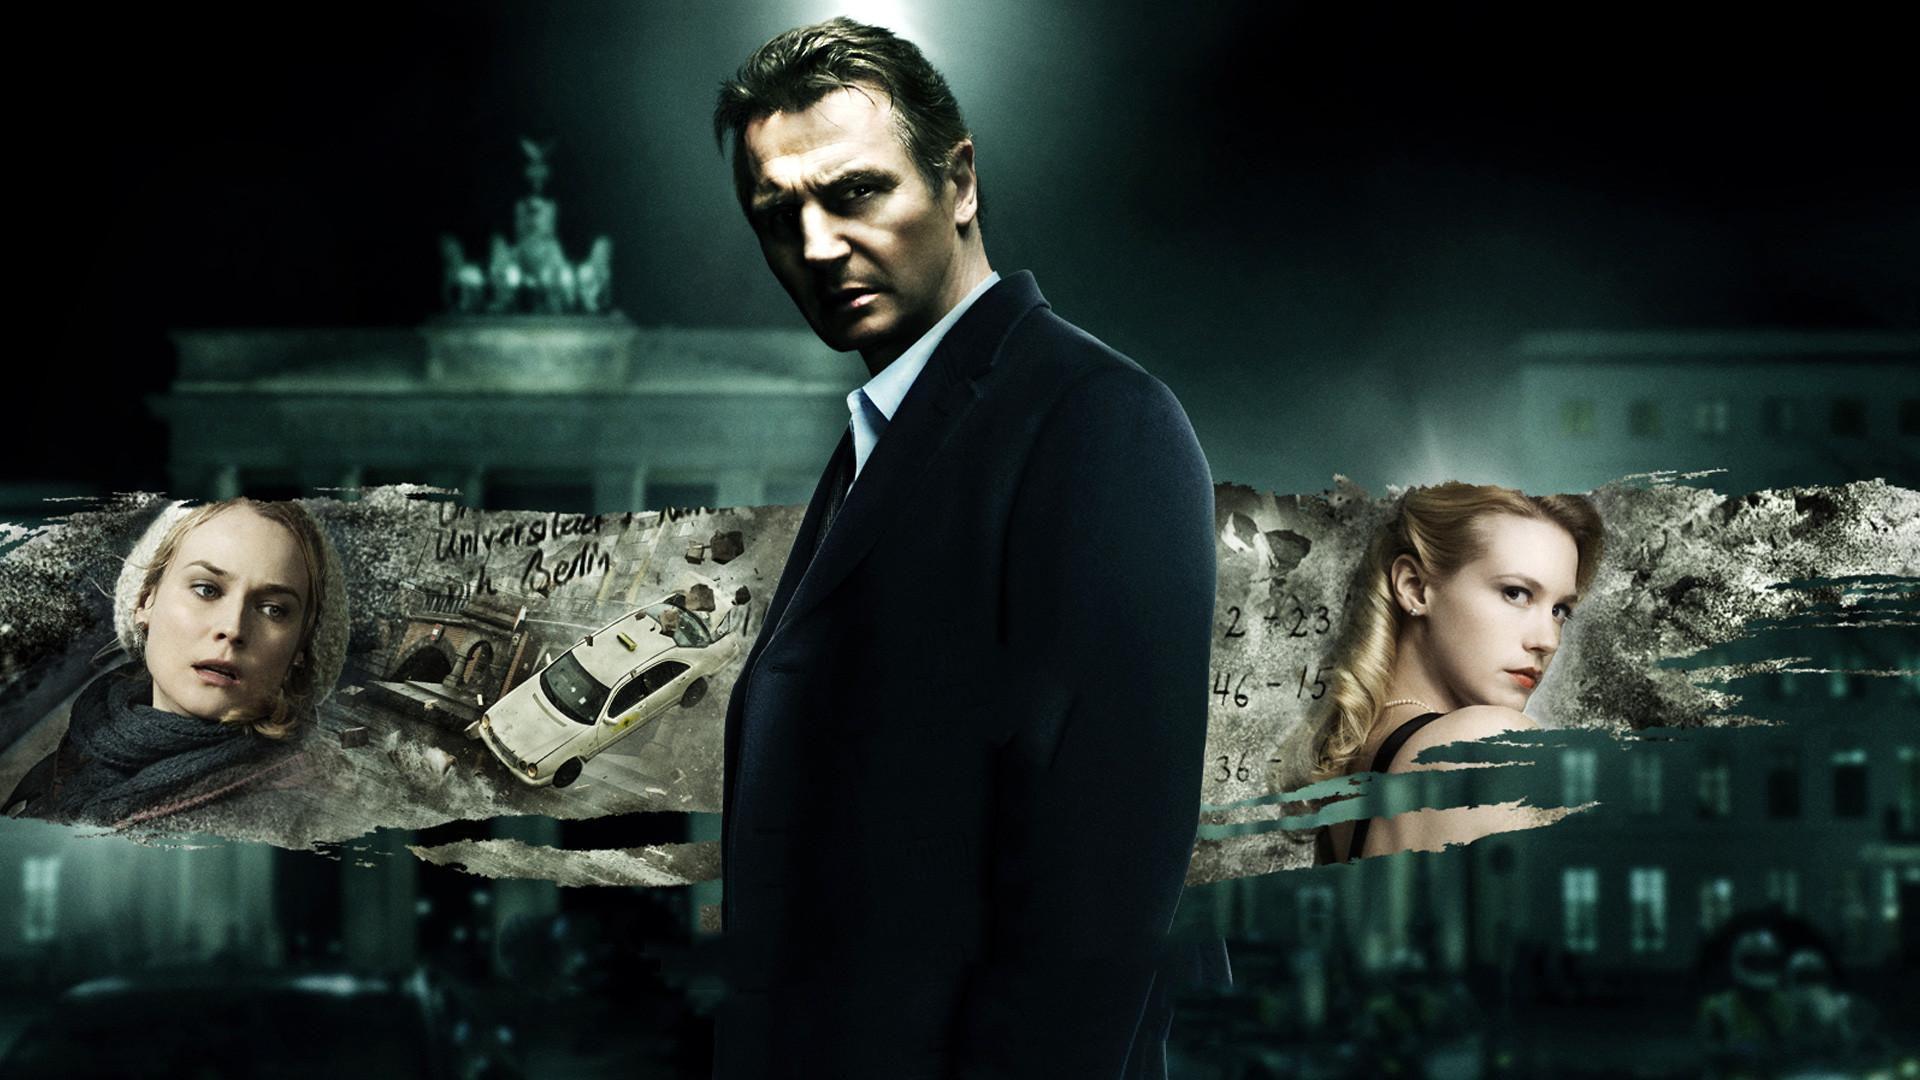 Liam Neeson Wallpaper Backgrounds